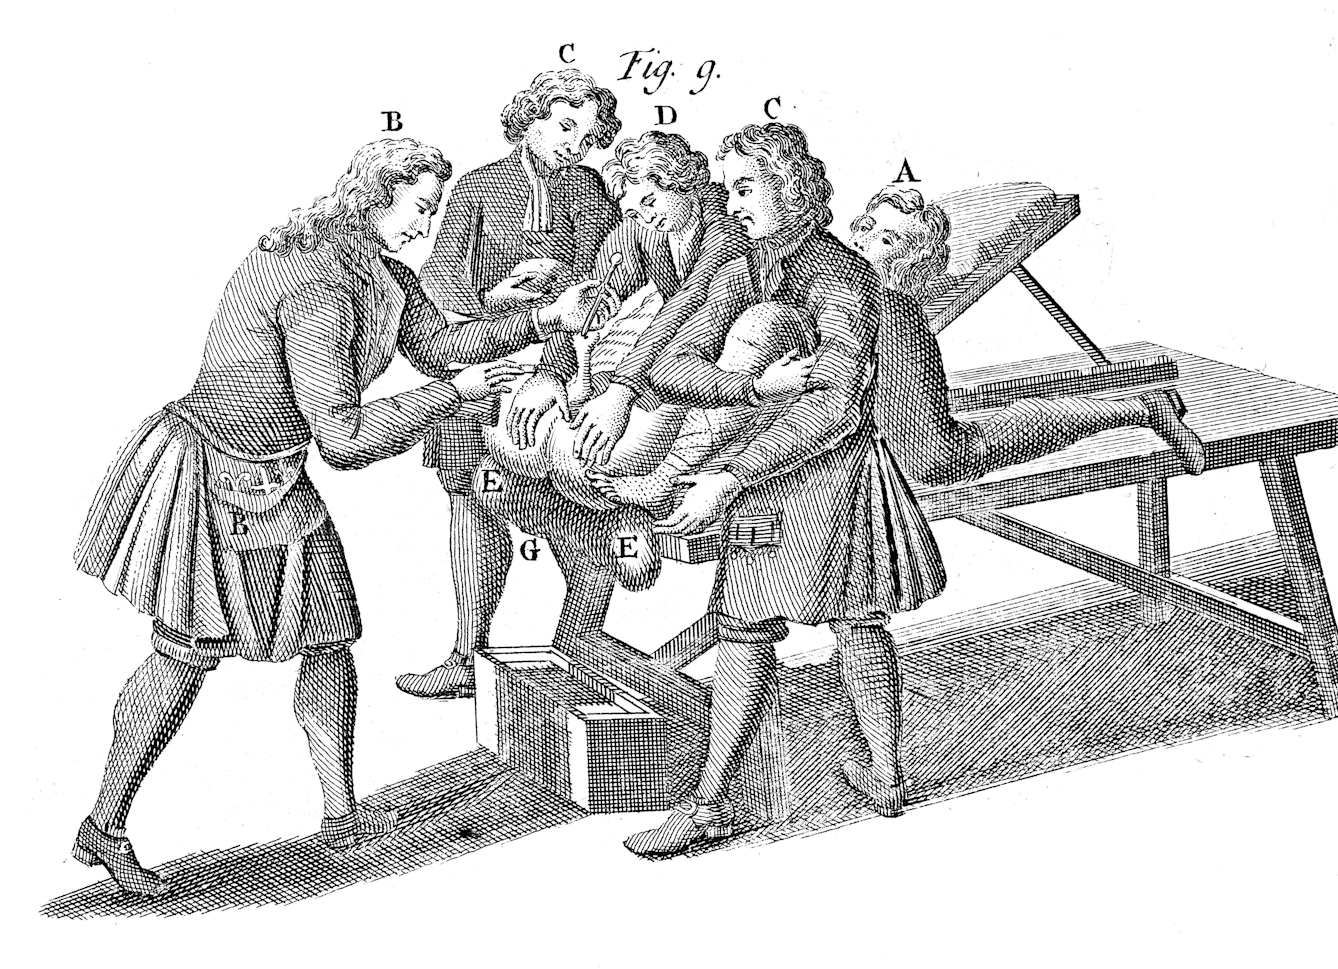 Heister, operation for lithotomy, 1768